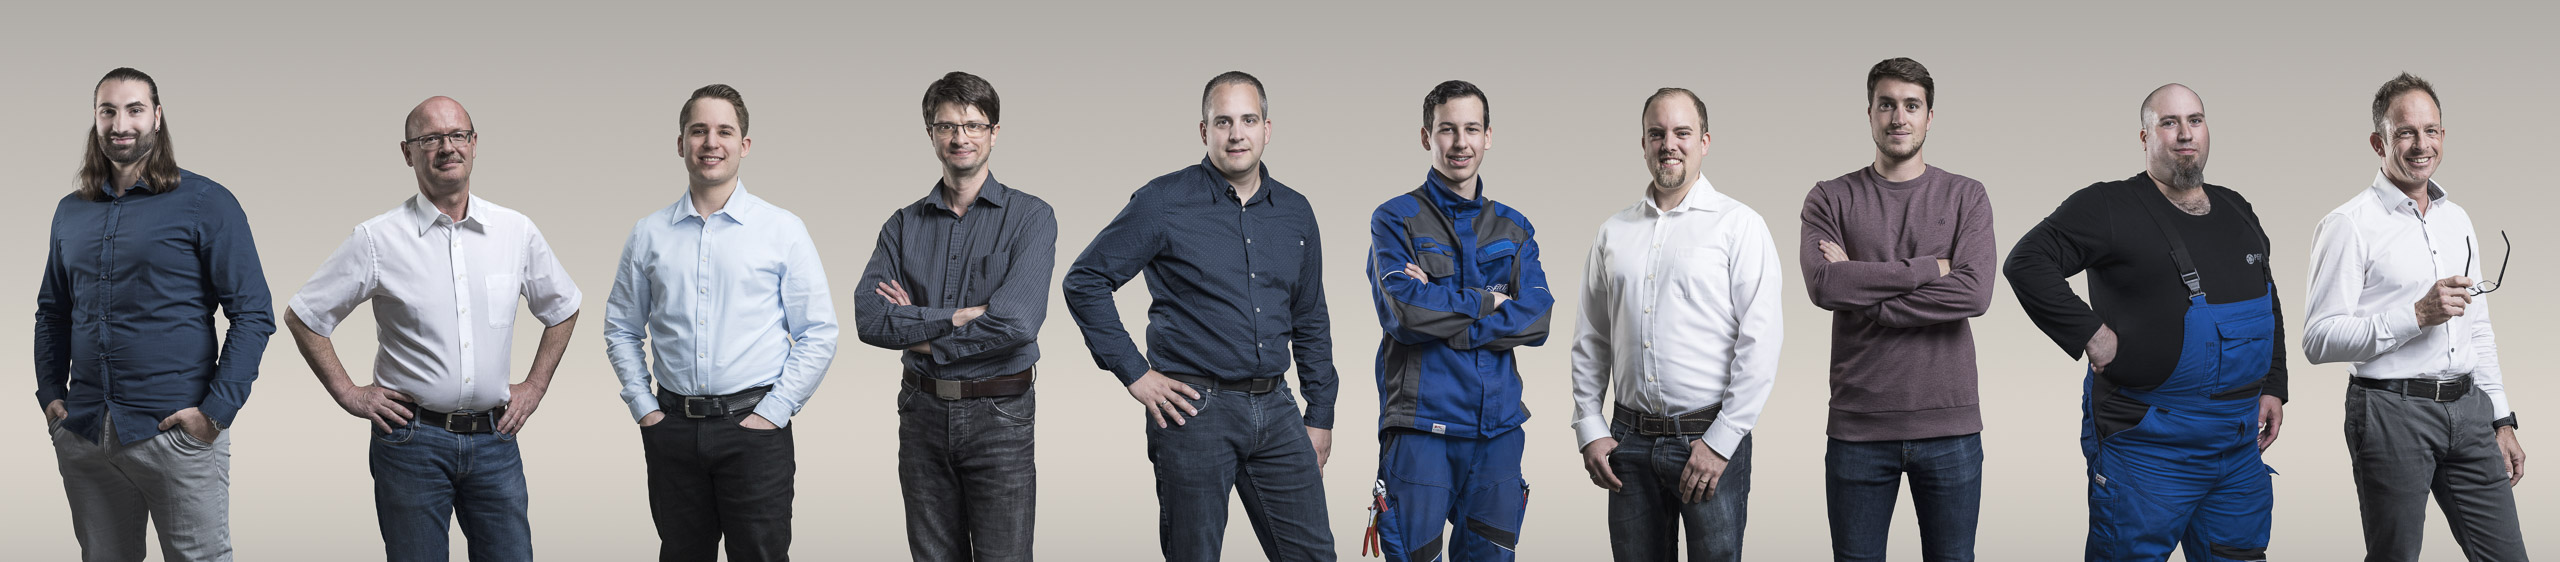 Teamfoto der Penta Electric Mitarbeiter